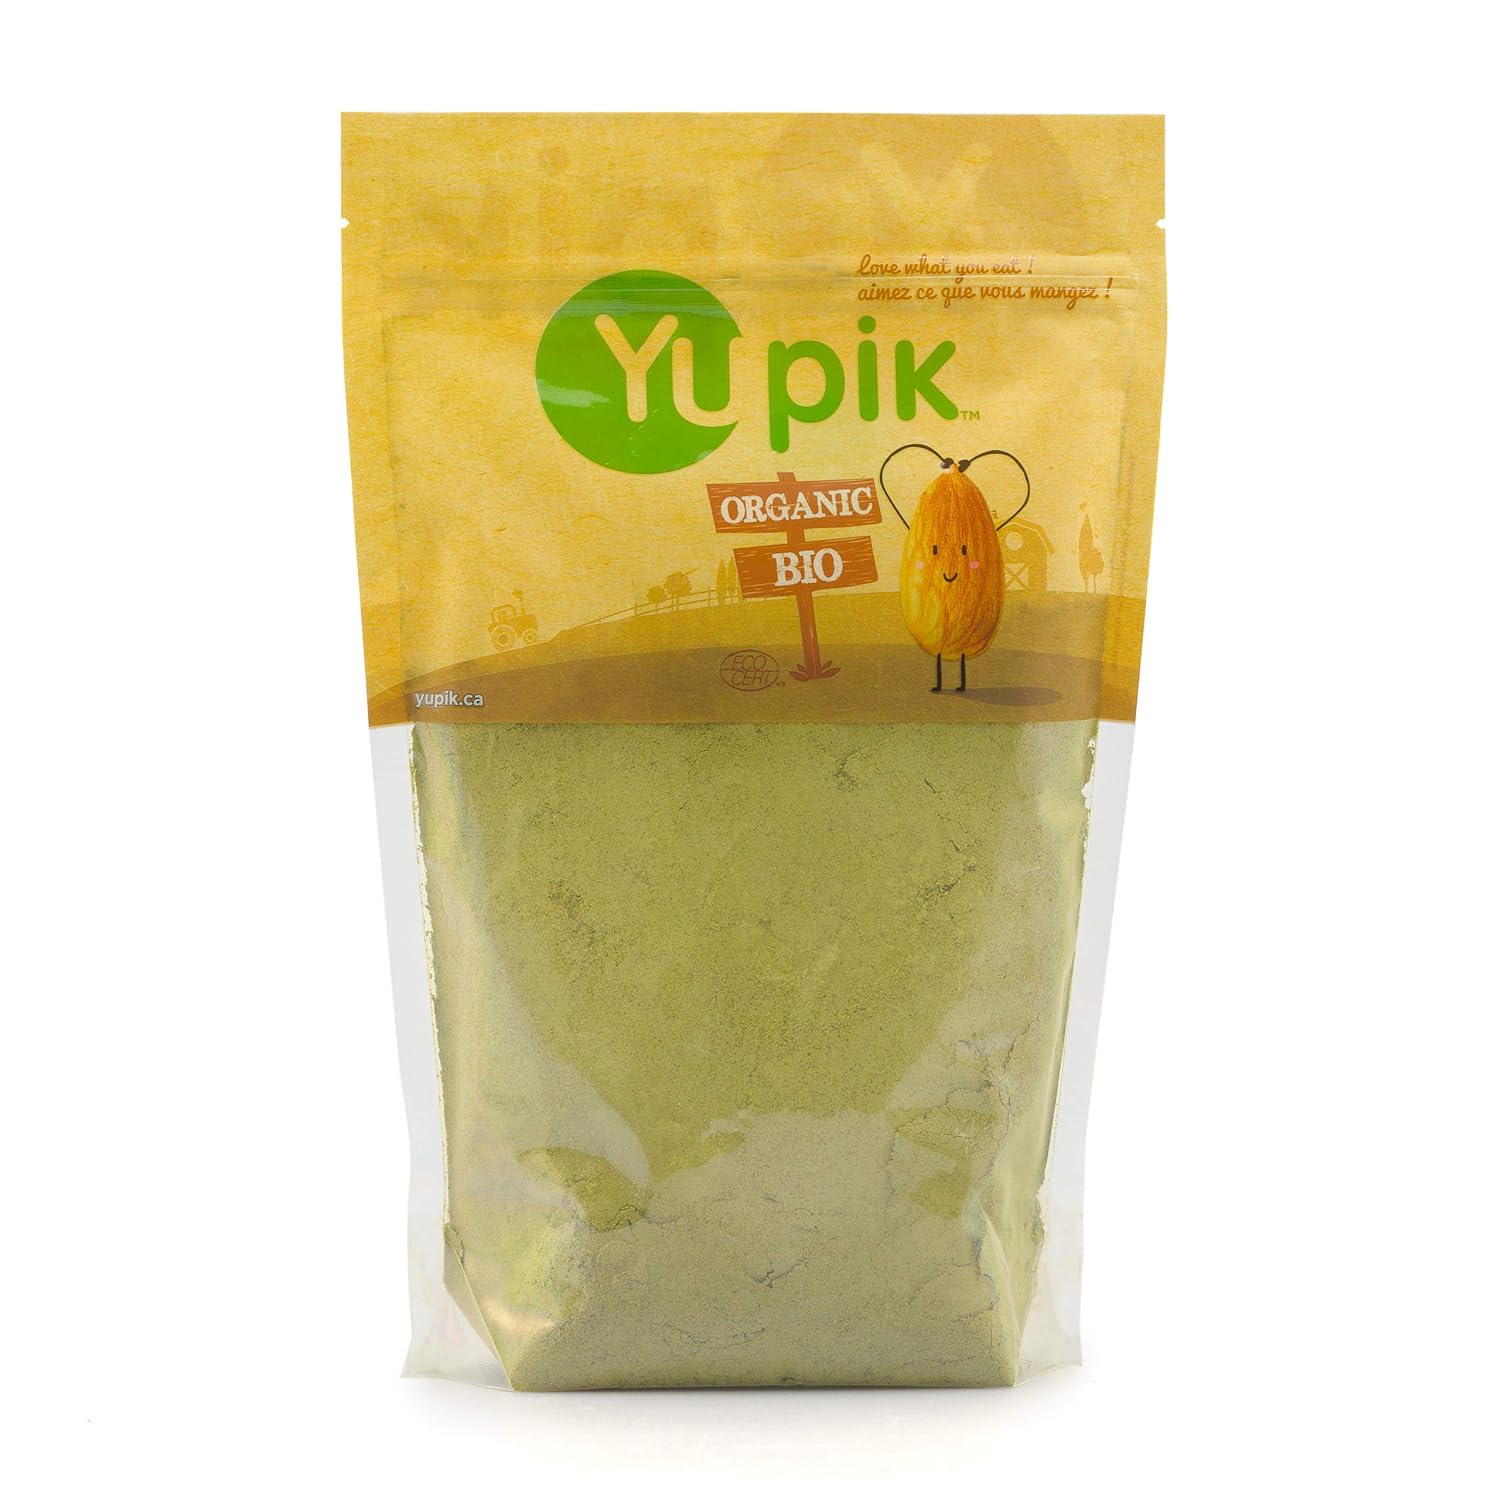 Yupik Organic Plant Based Raw Seeds Protein Powder, Pumpkin, 65% Eu, 2.2 lb, Non-GMO, Vegan, Gluten-Free, Pack of 1